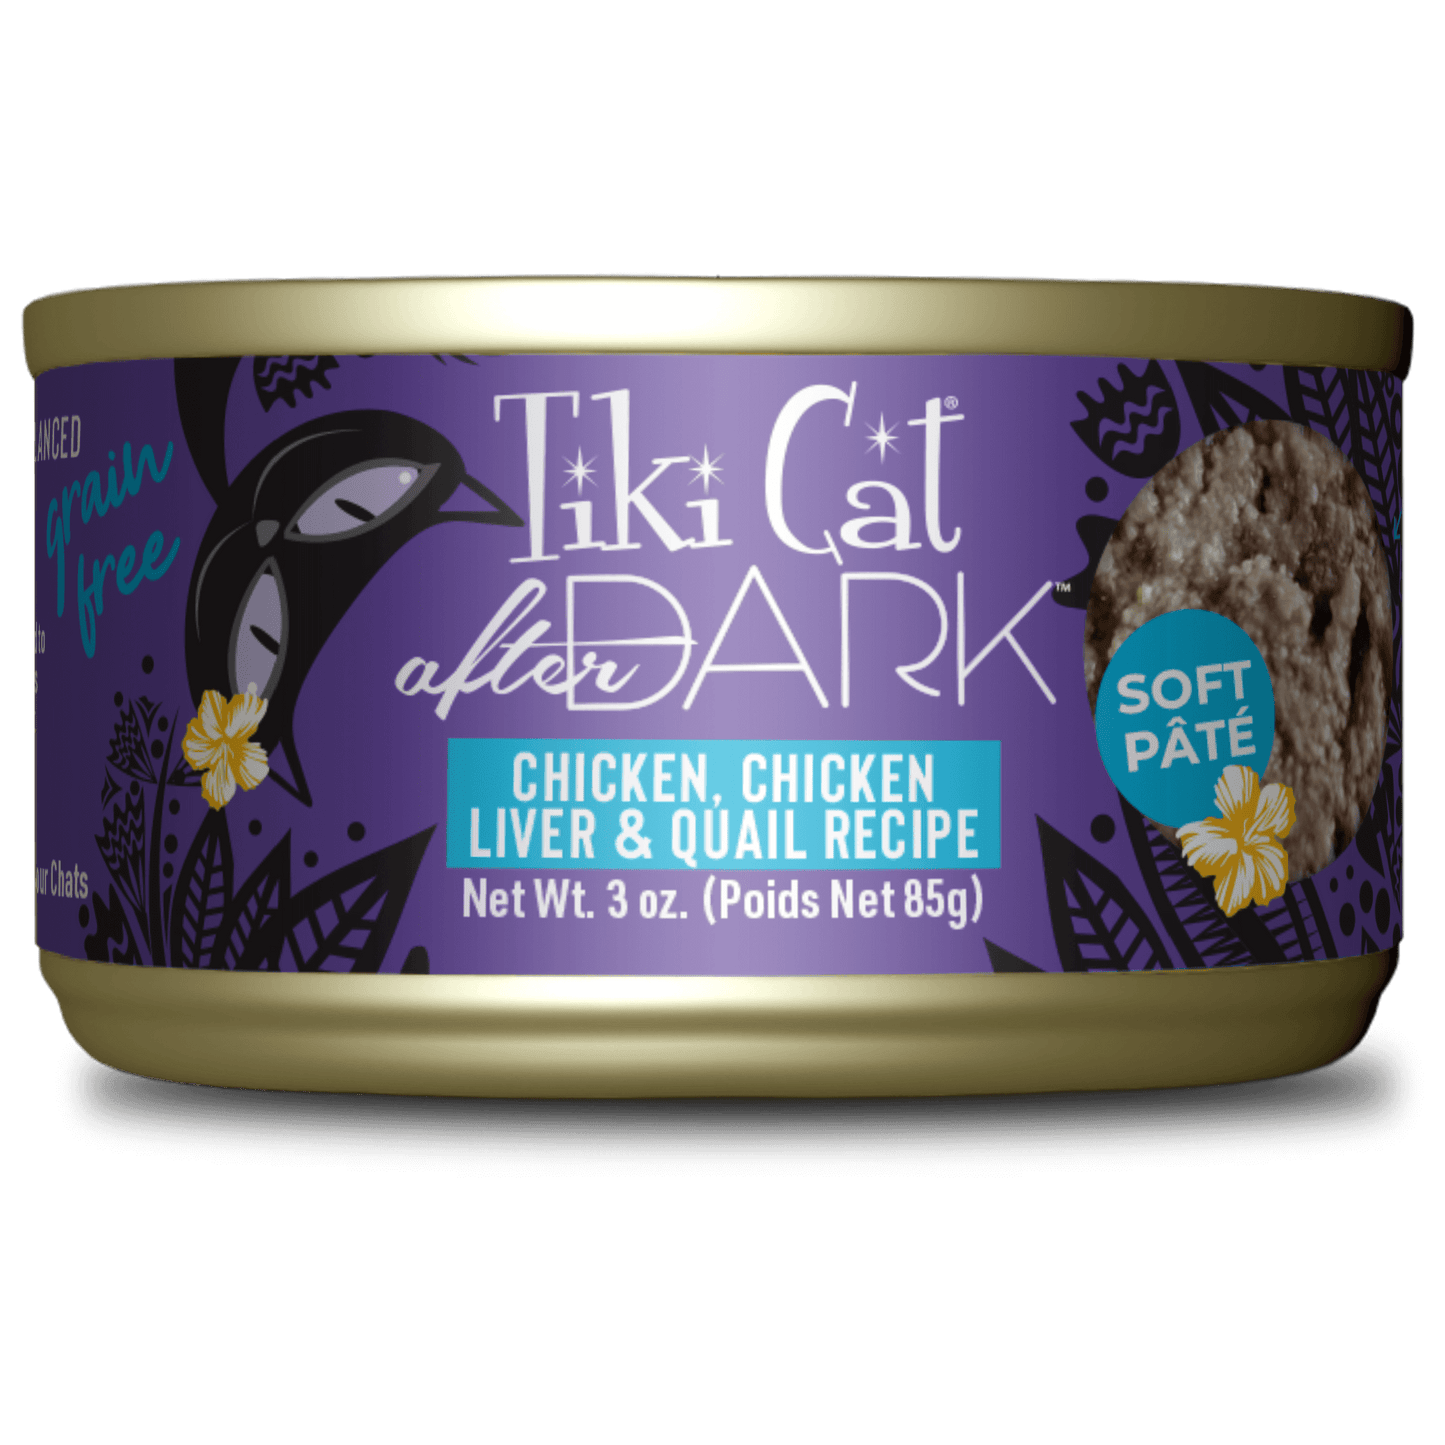 Tiki Cat® After Dark™ Soft Paté Chicken, Chicken Liver & Quail Recipe 3oz